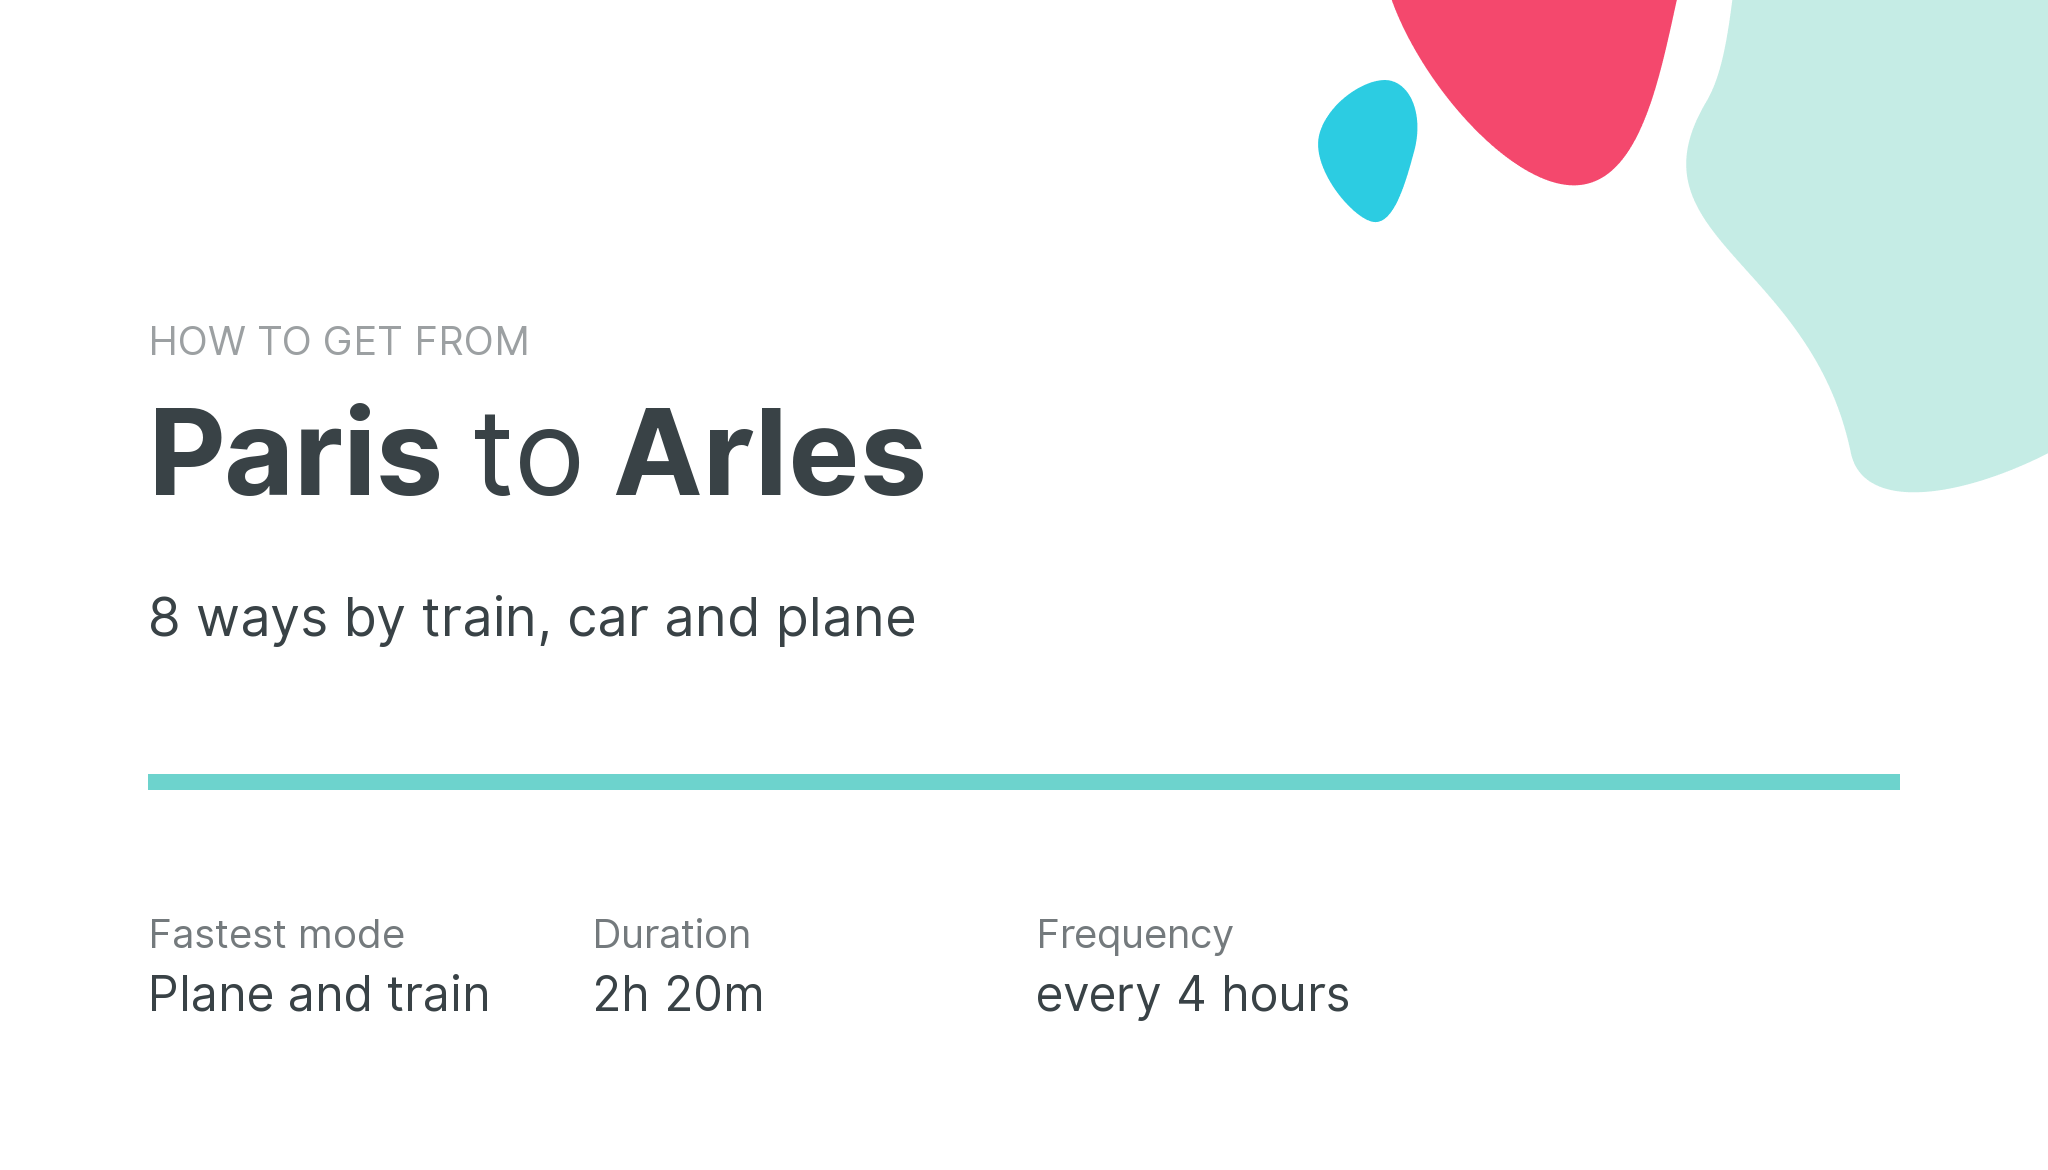 How do I get from Paris to Arles